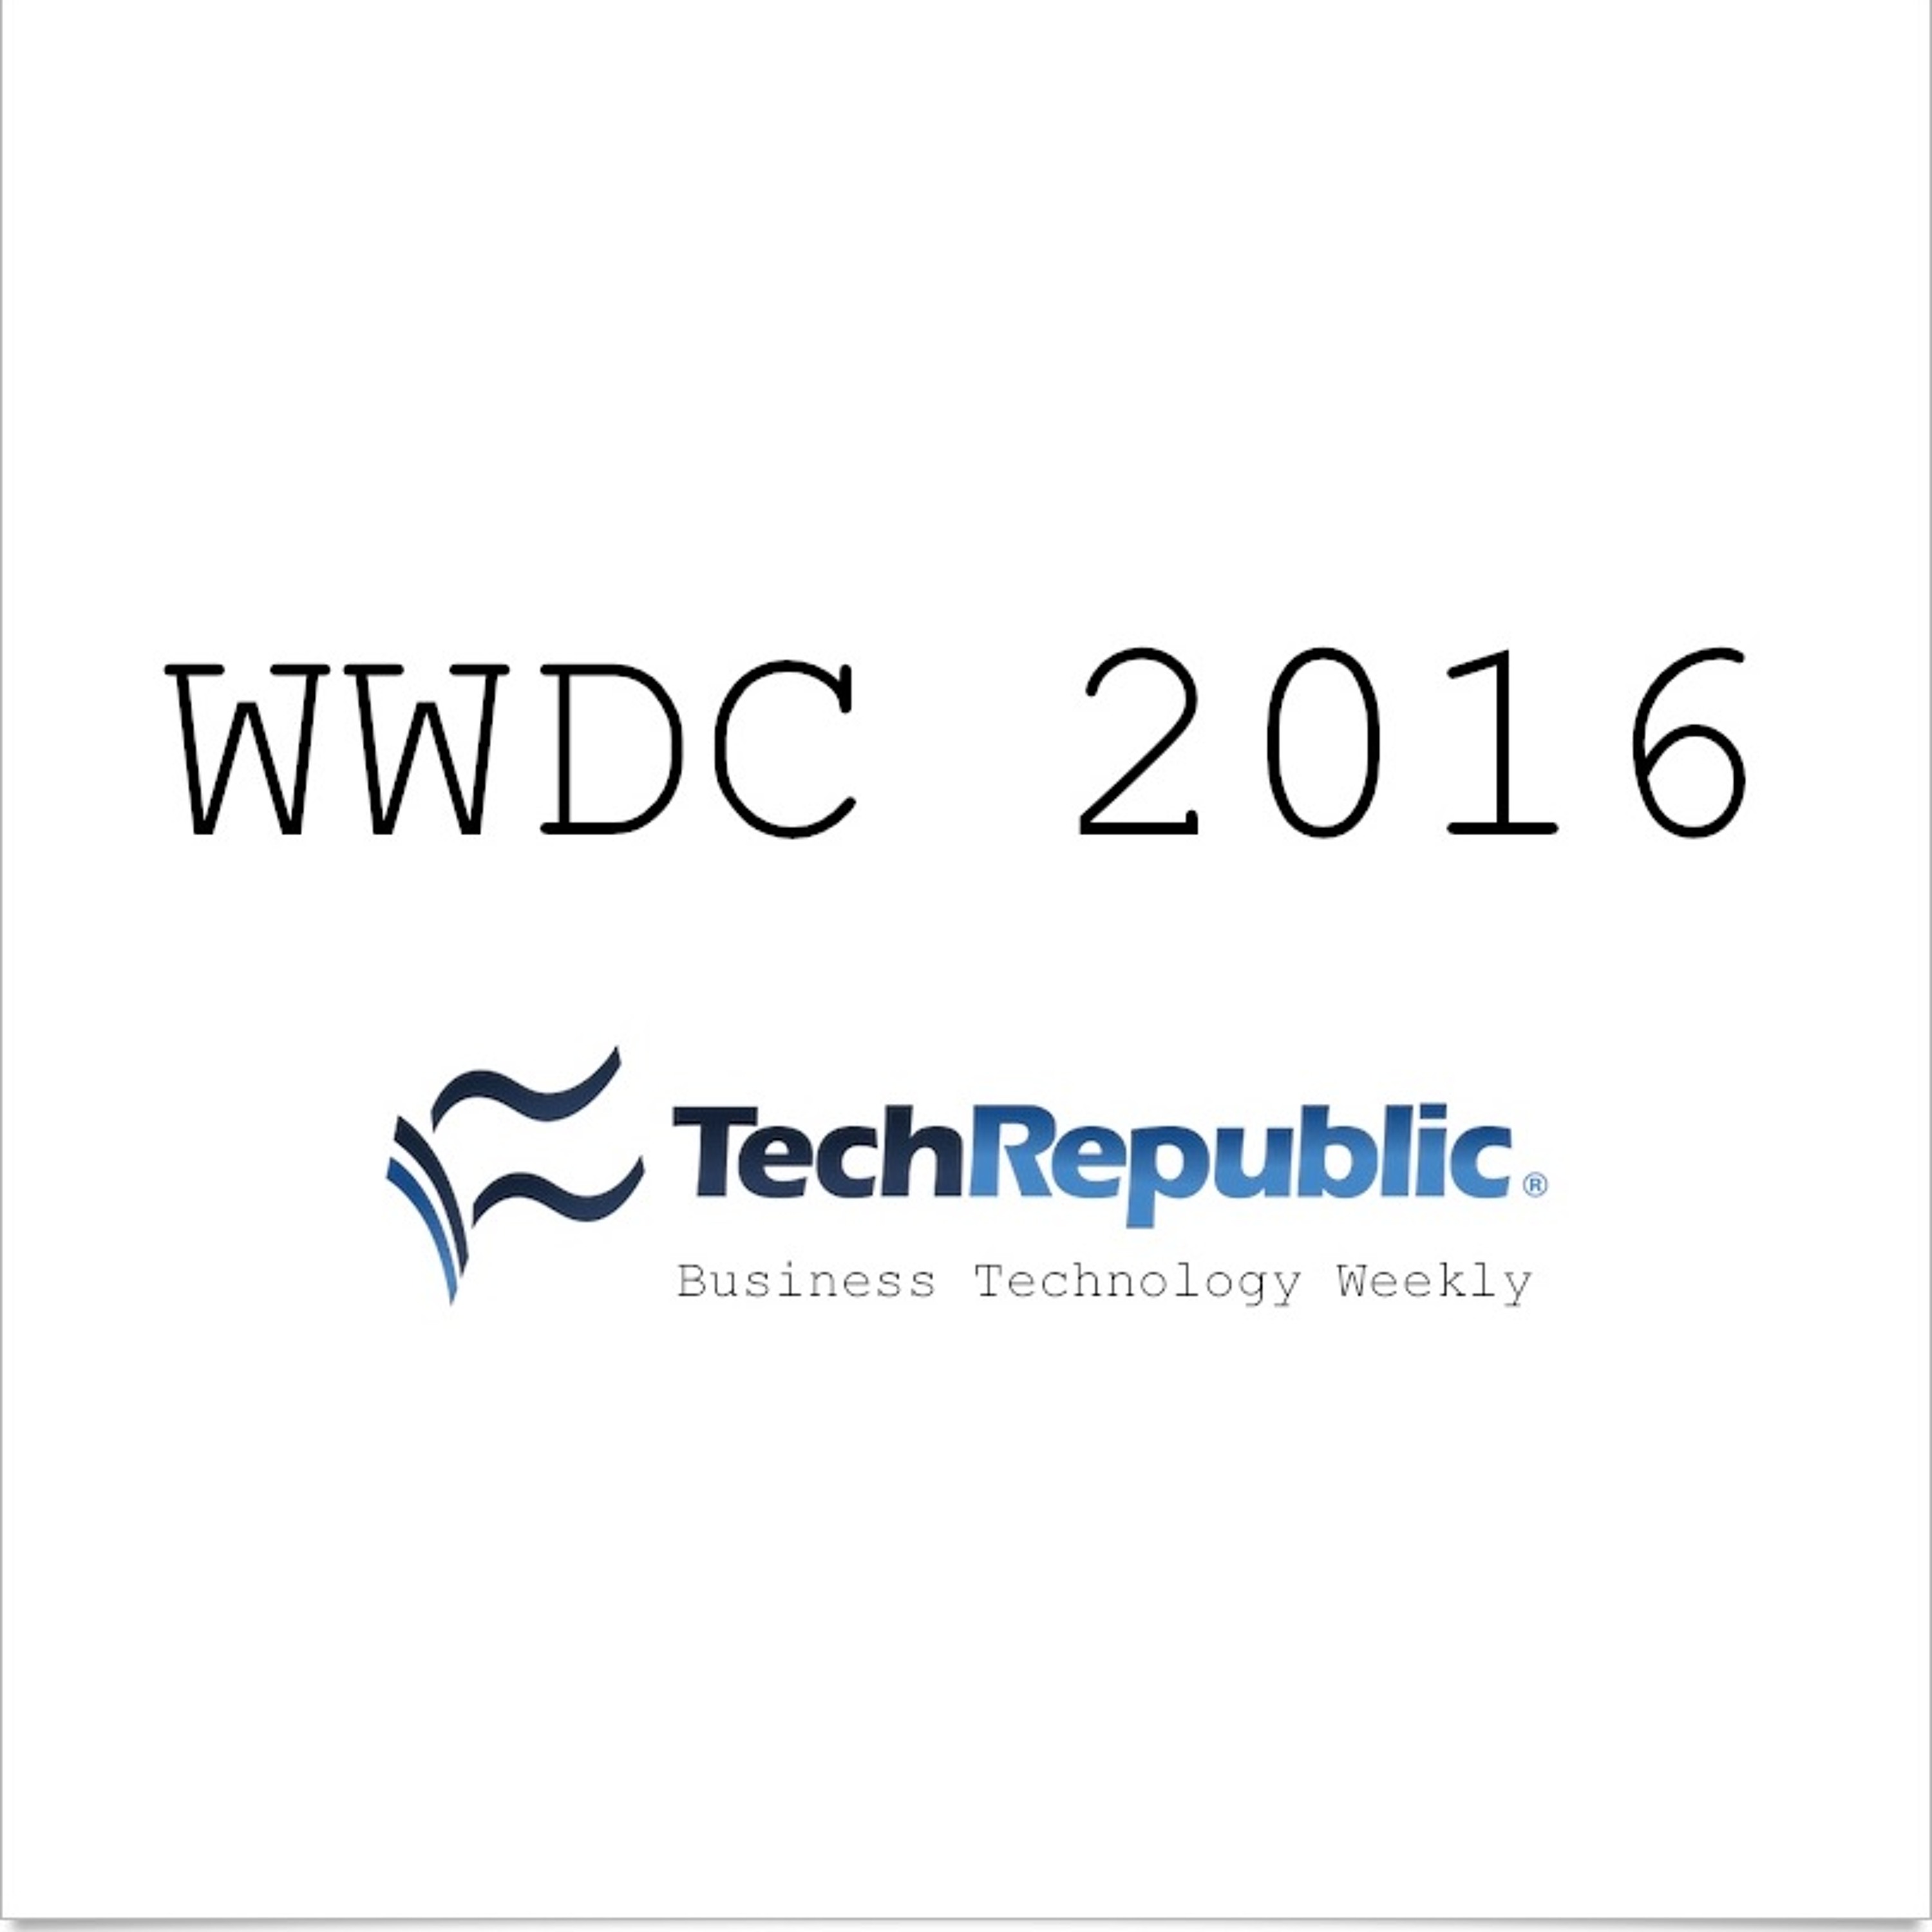 WWDC 2016: Apple the Underdog - TechRepublic's Business Technology Weekly